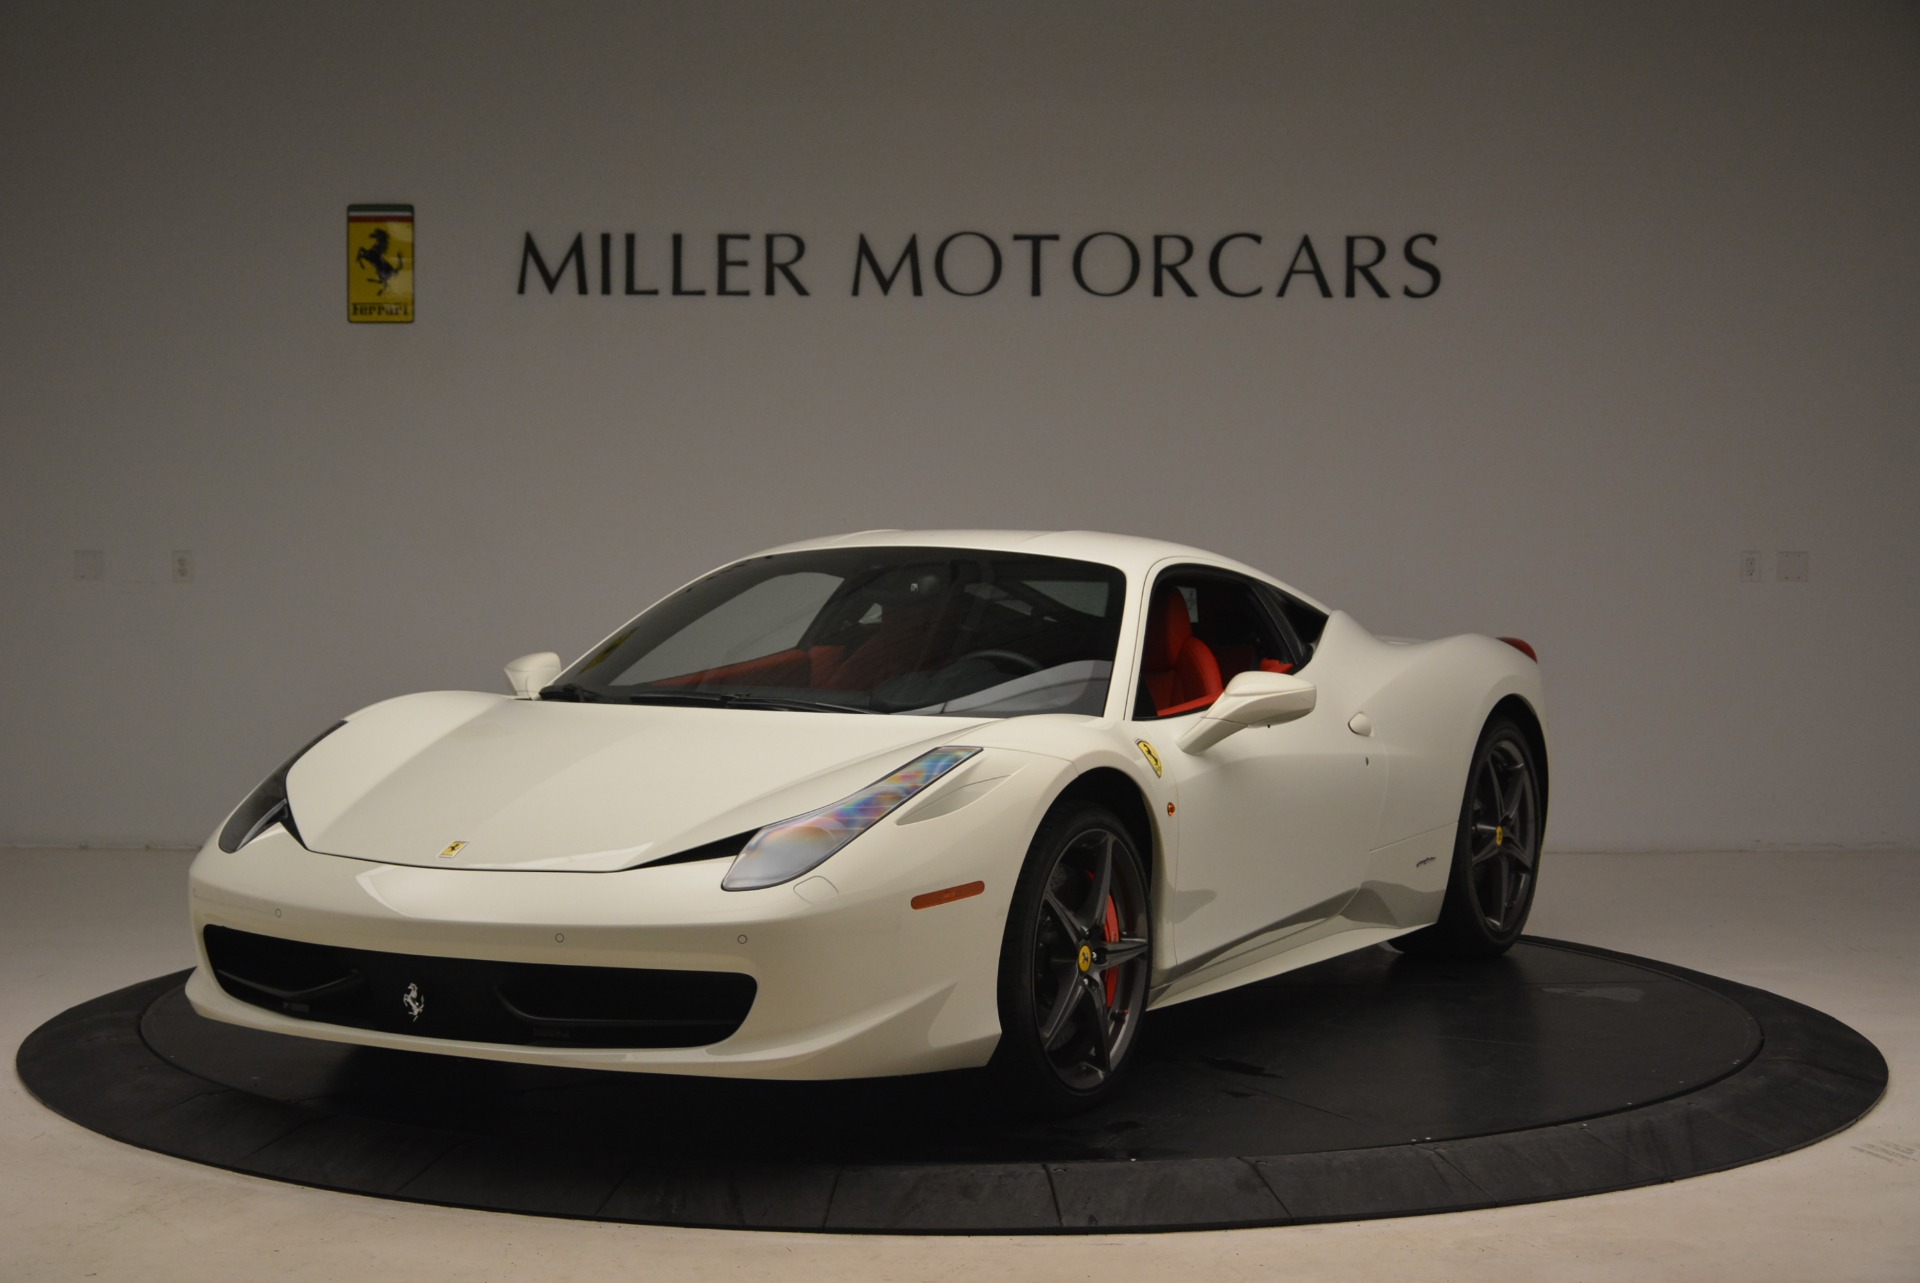 Used 2014 Ferrari 458 Italia for sale Sold at McLaren Greenwich in Greenwich CT 06830 1